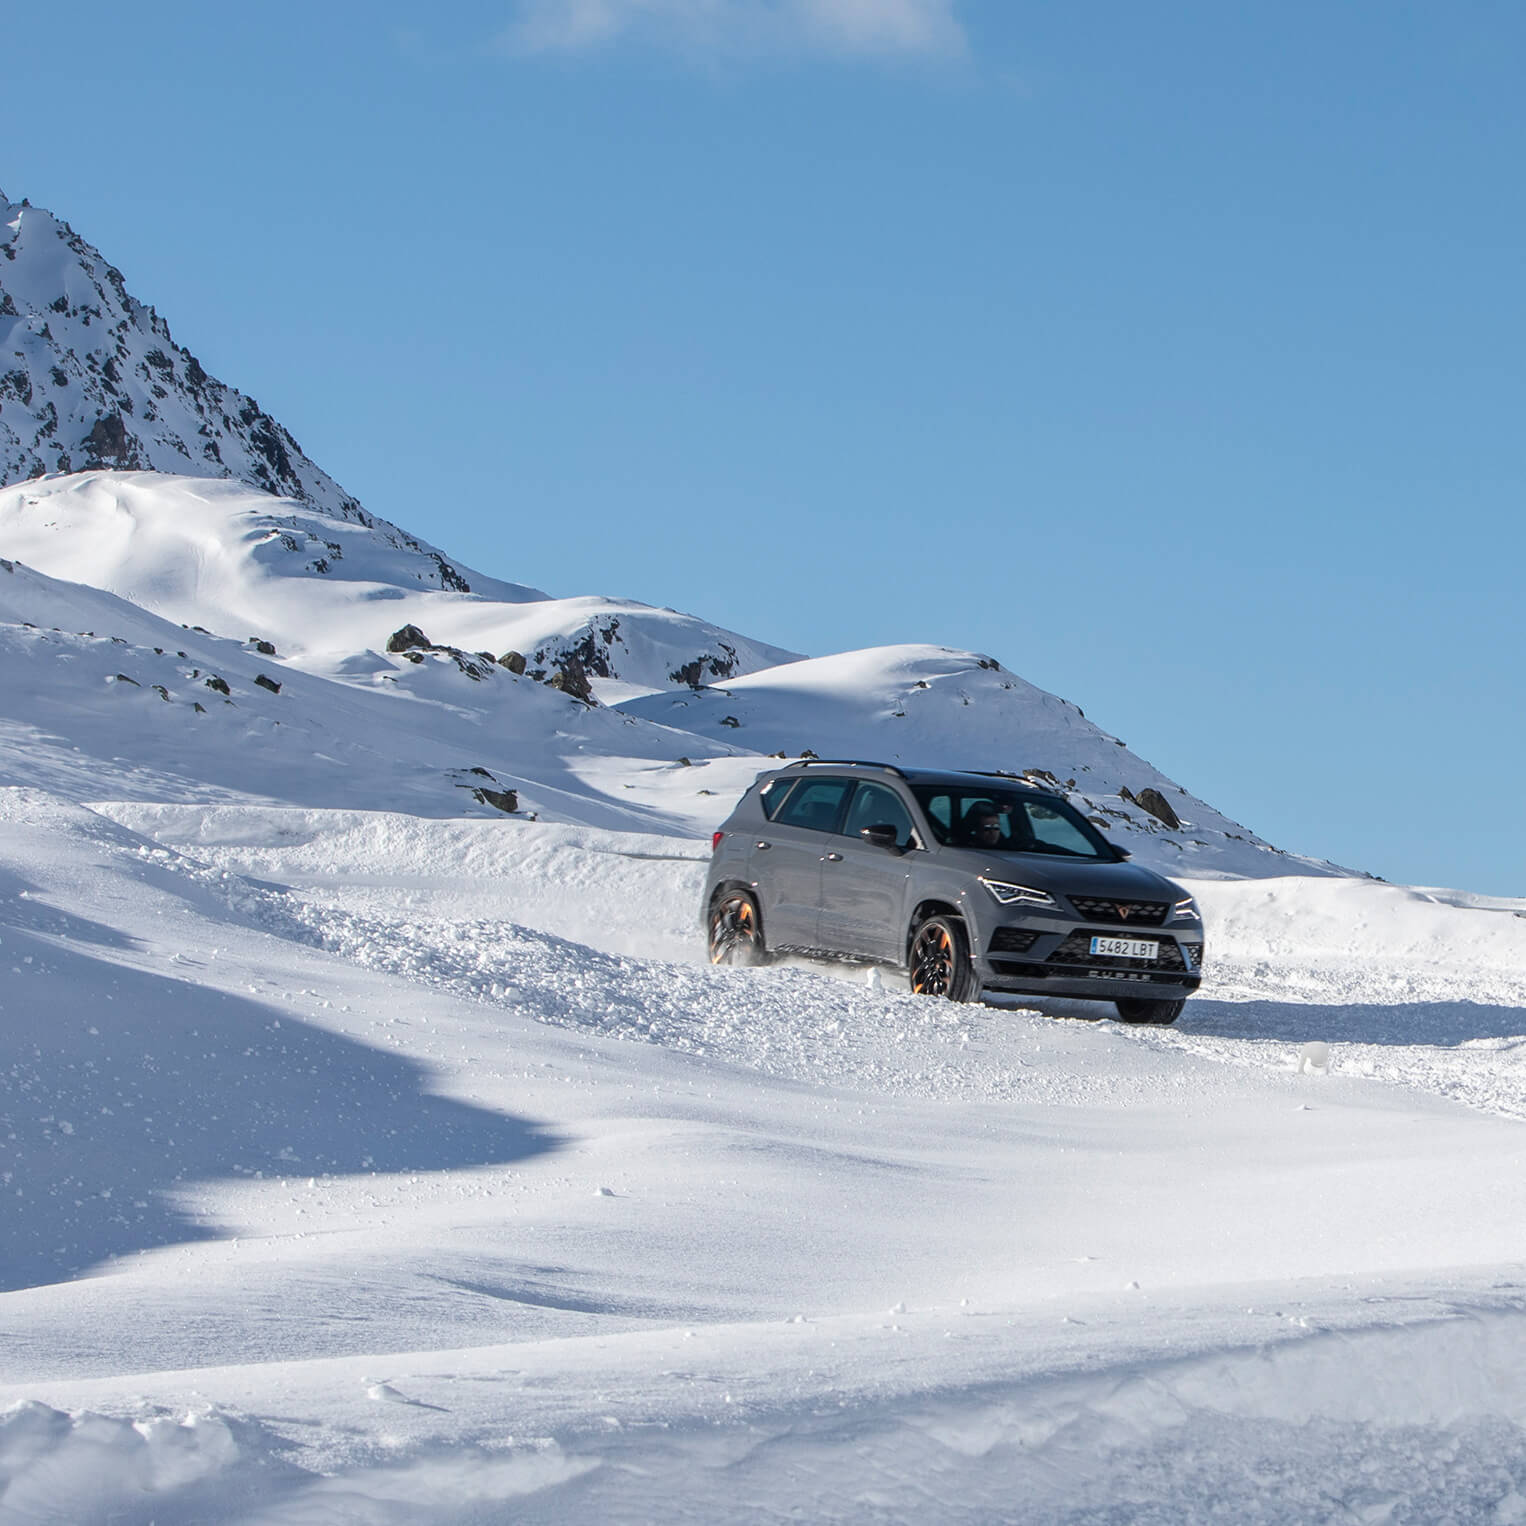 A CUPRA Ateca driving down a snowy mountain